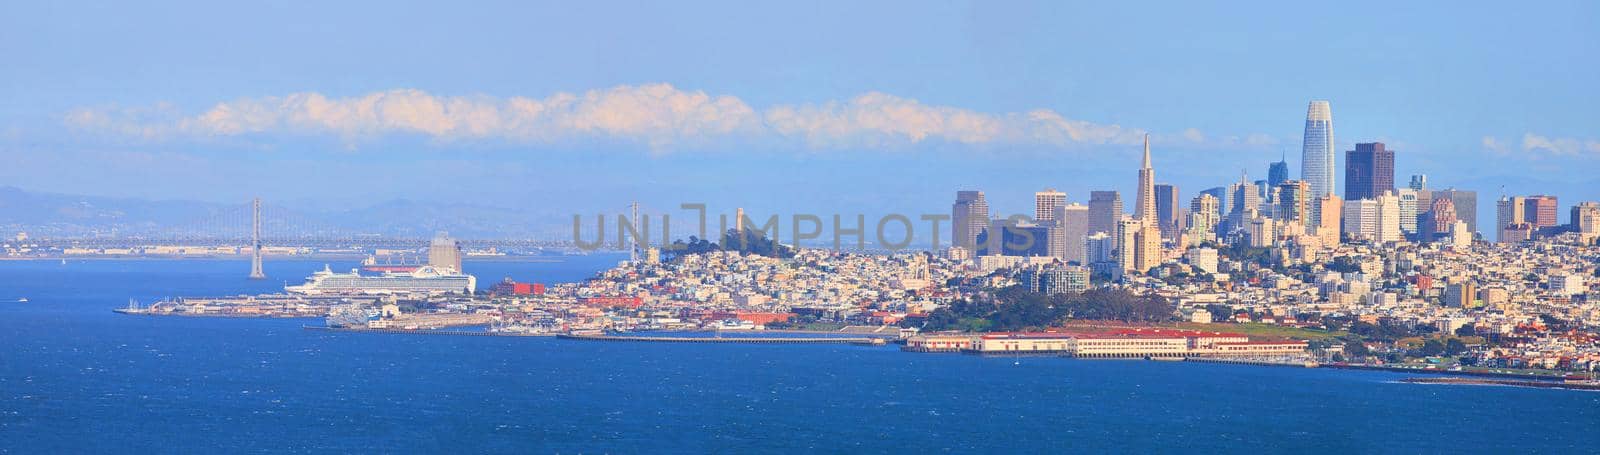 Image of Panorama of stunning San Francisco, California skyline